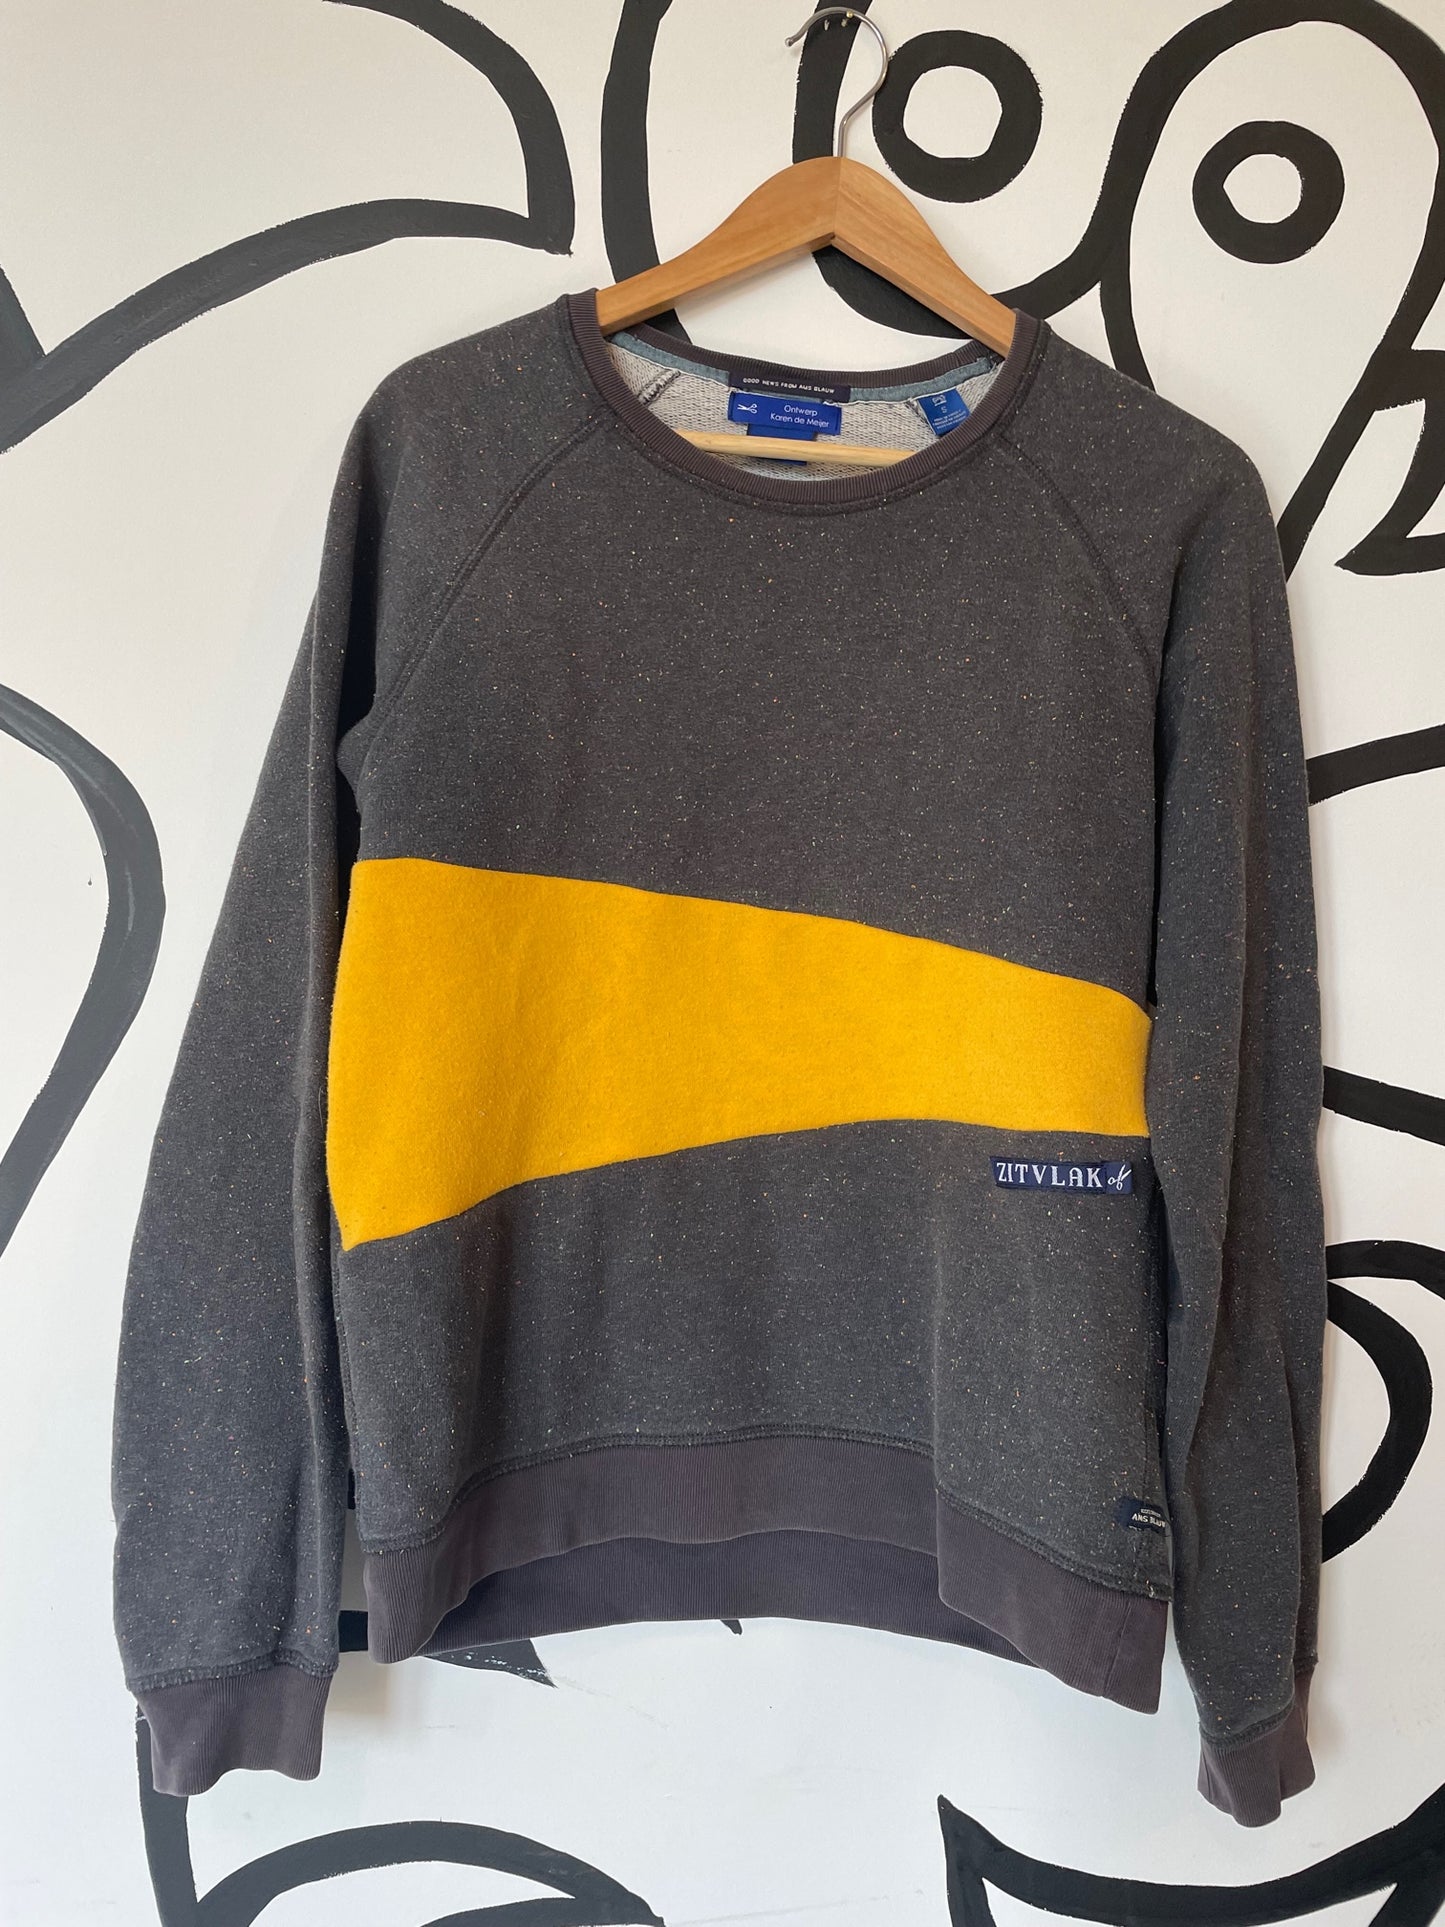 Zitvlak Handmade upcycled sweater grey/yellow